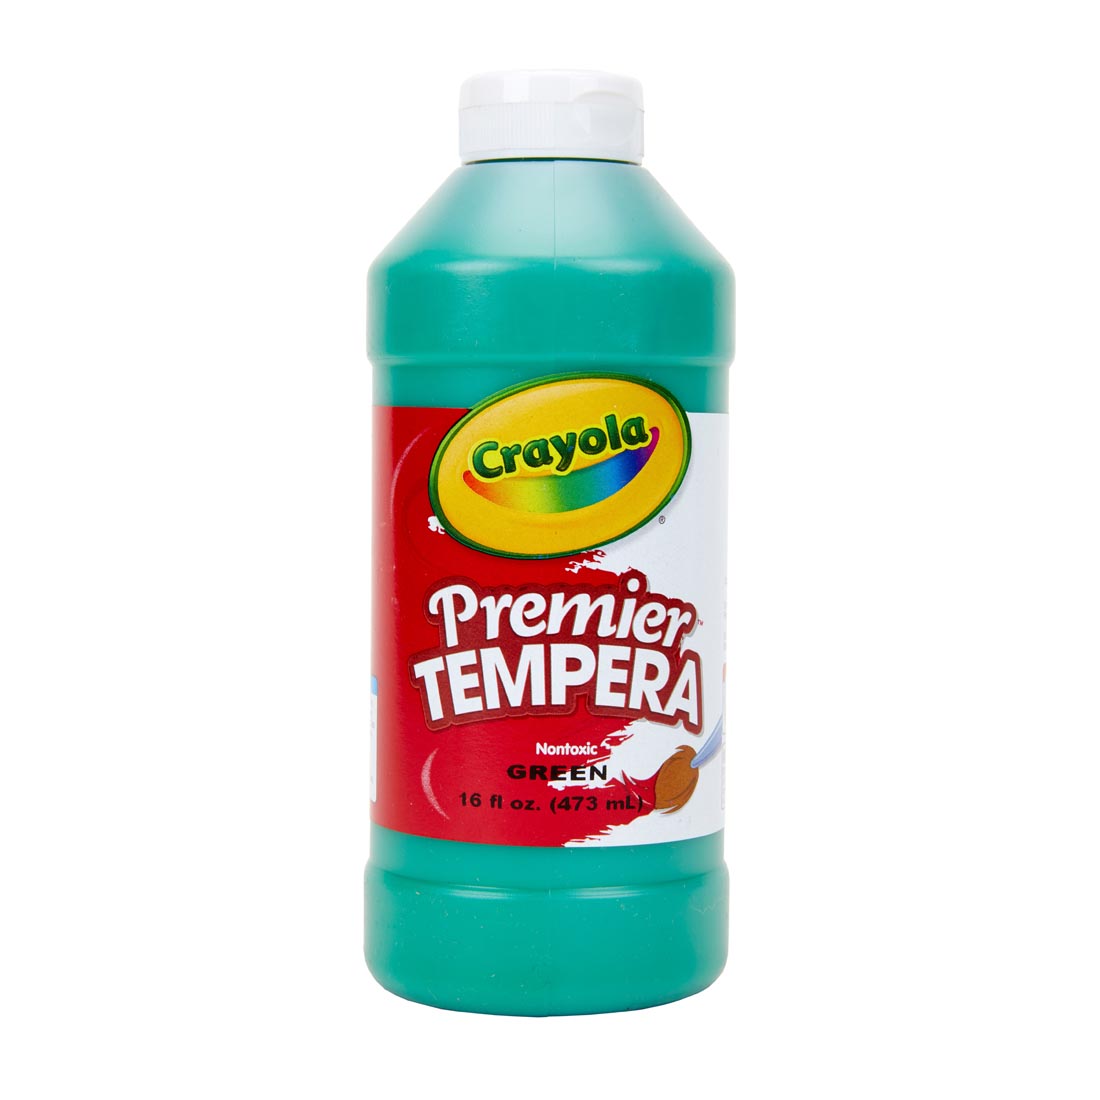 Bottle of Green Crayola Premier Tempera Paint